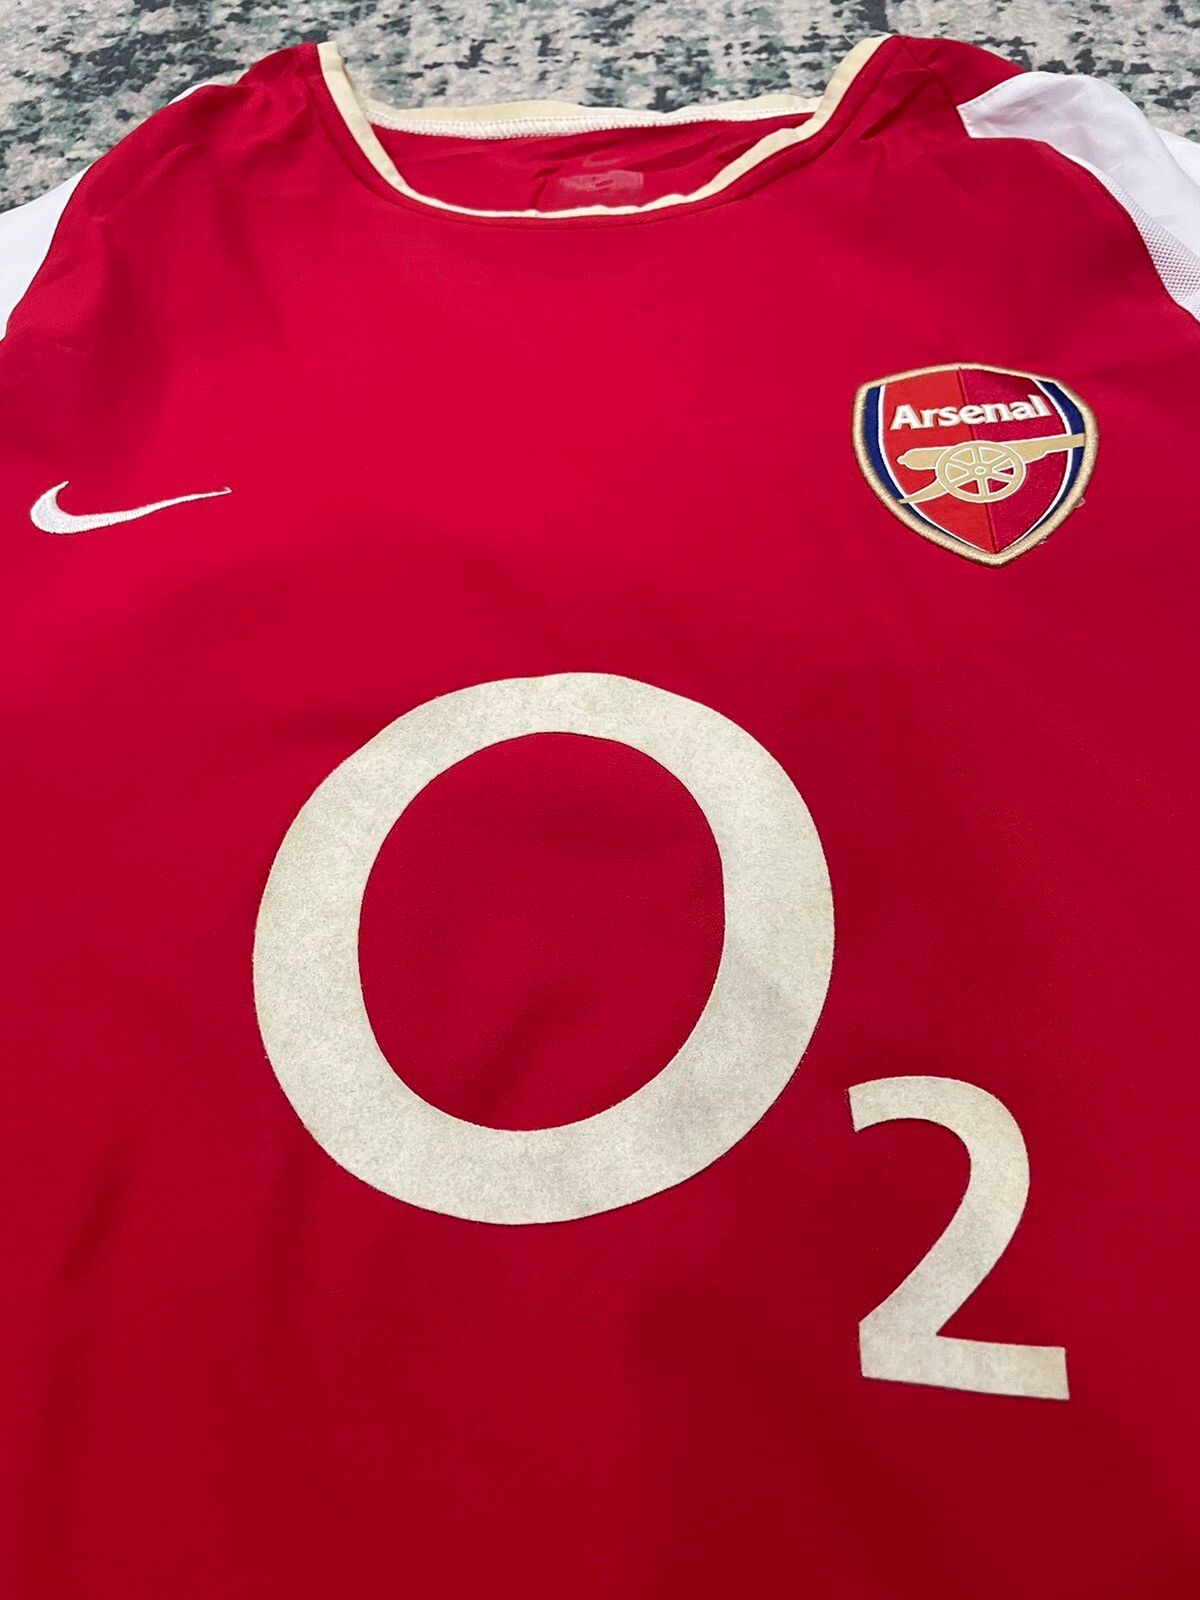 Arsenal 02/03 Vintage Jersey - 6